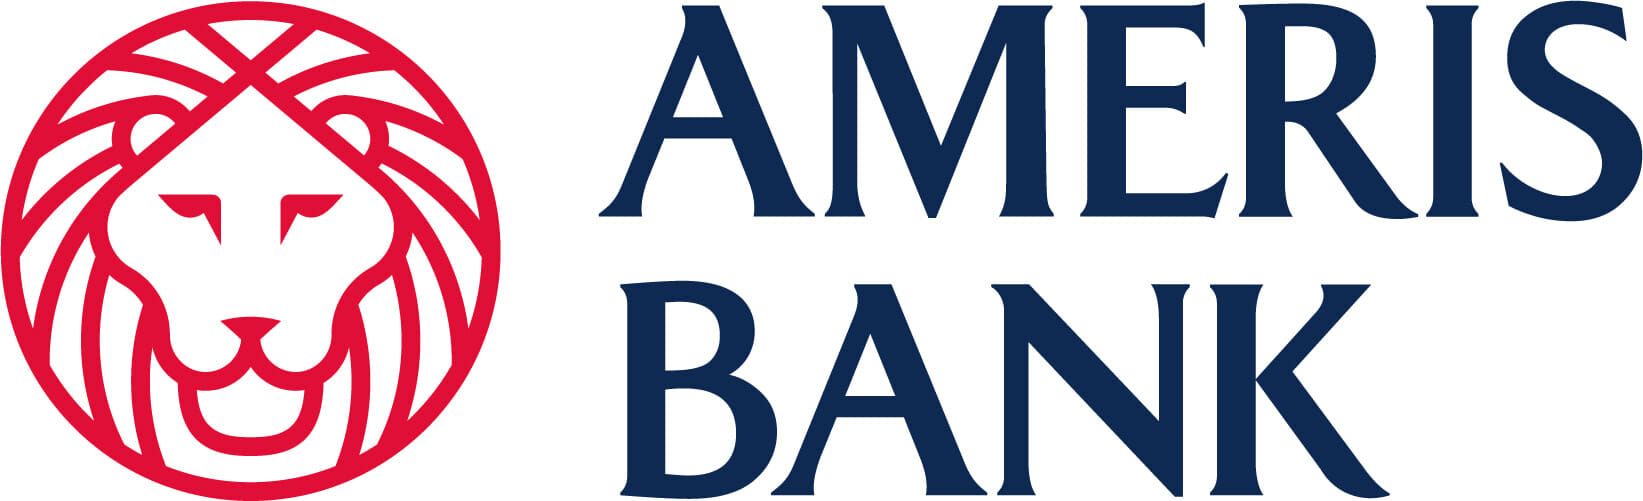 ameris bank